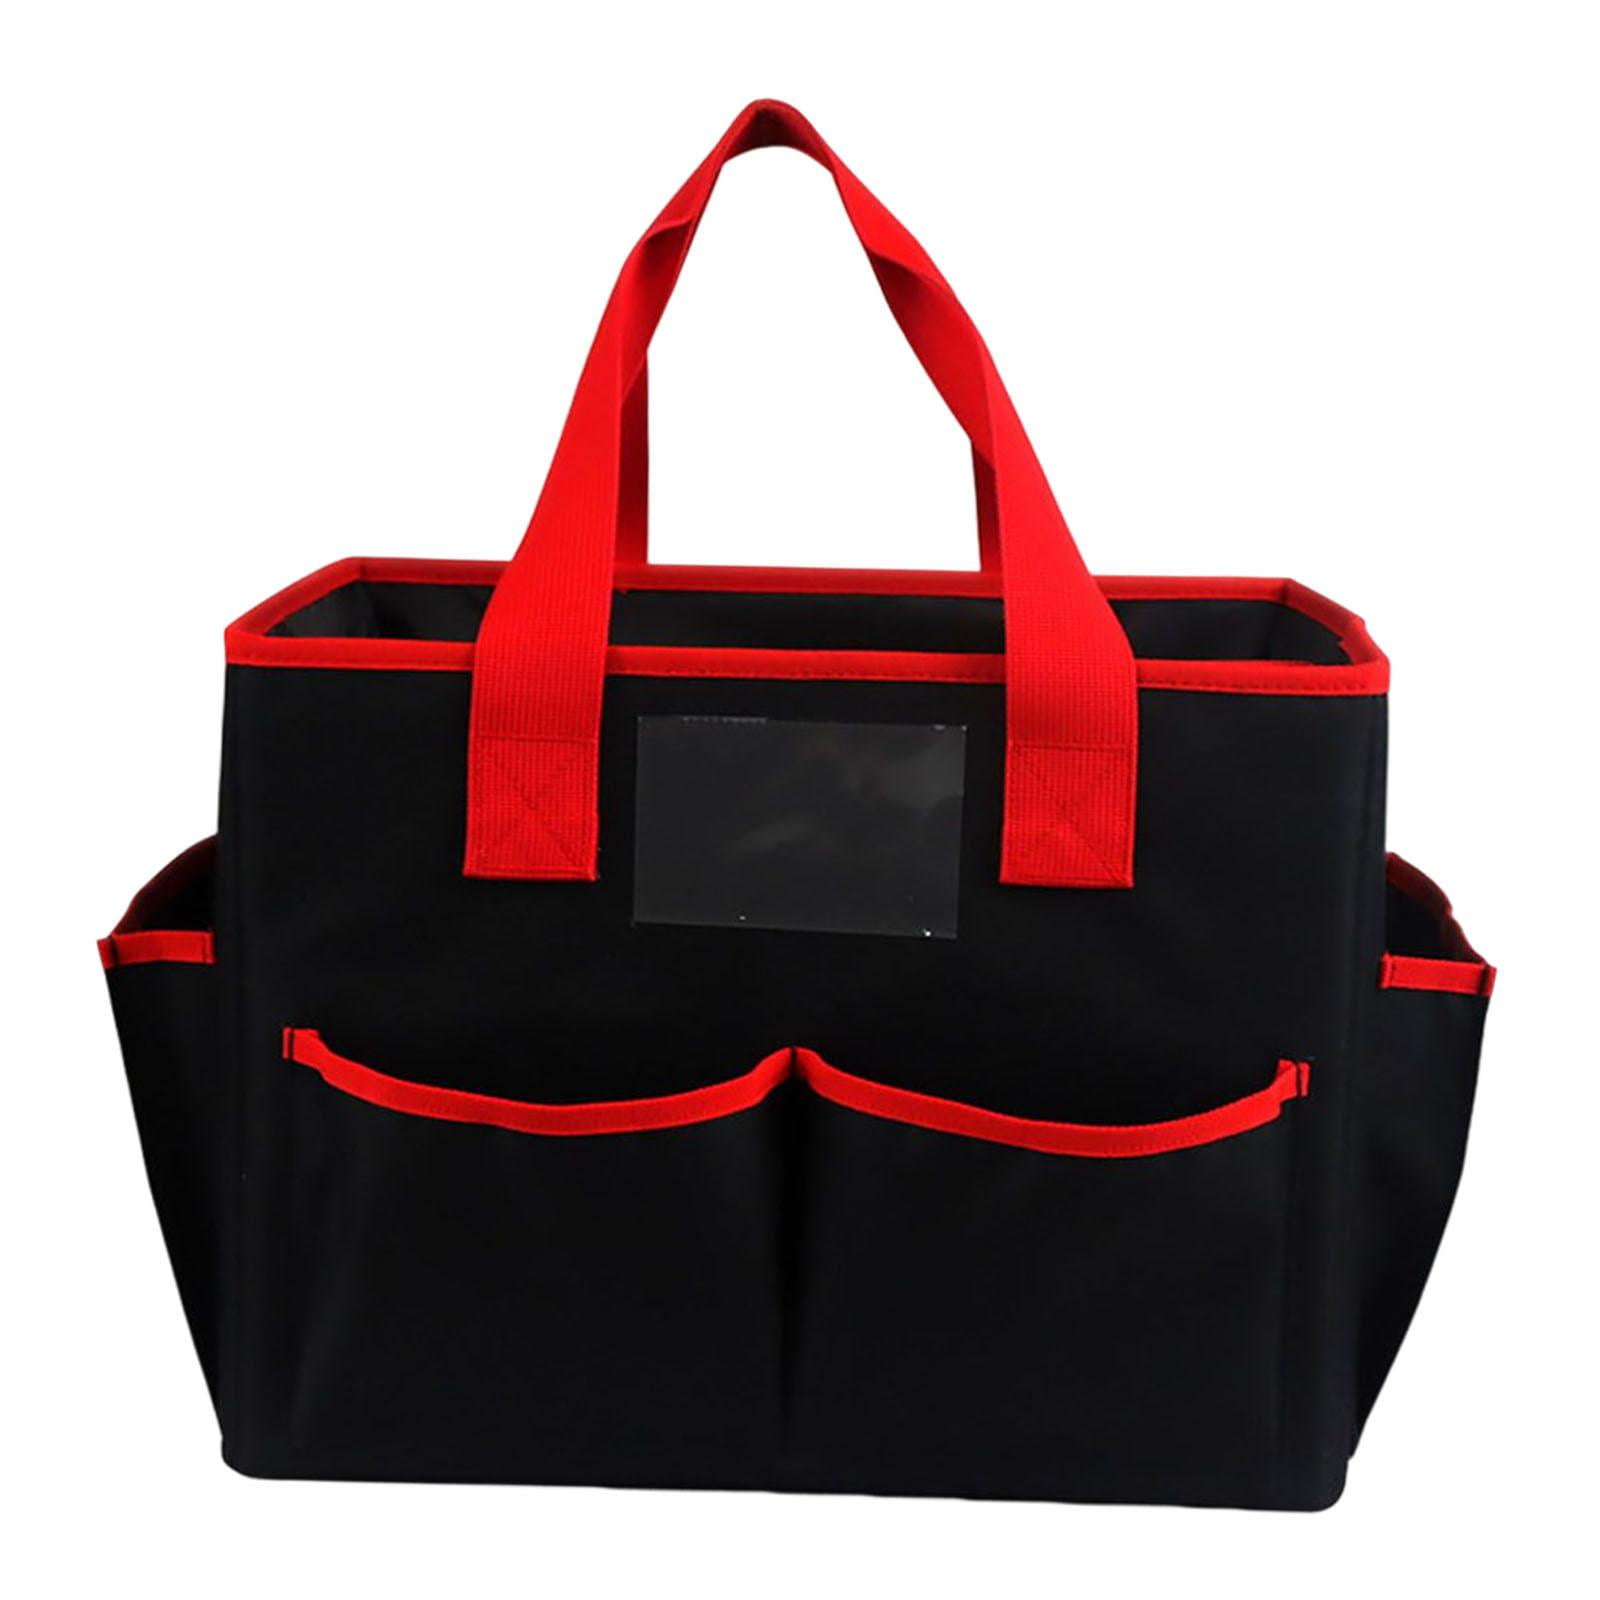 Oxford Cloth Multipurpose Waterproof Tote Bag Tool Sewing Blue Red